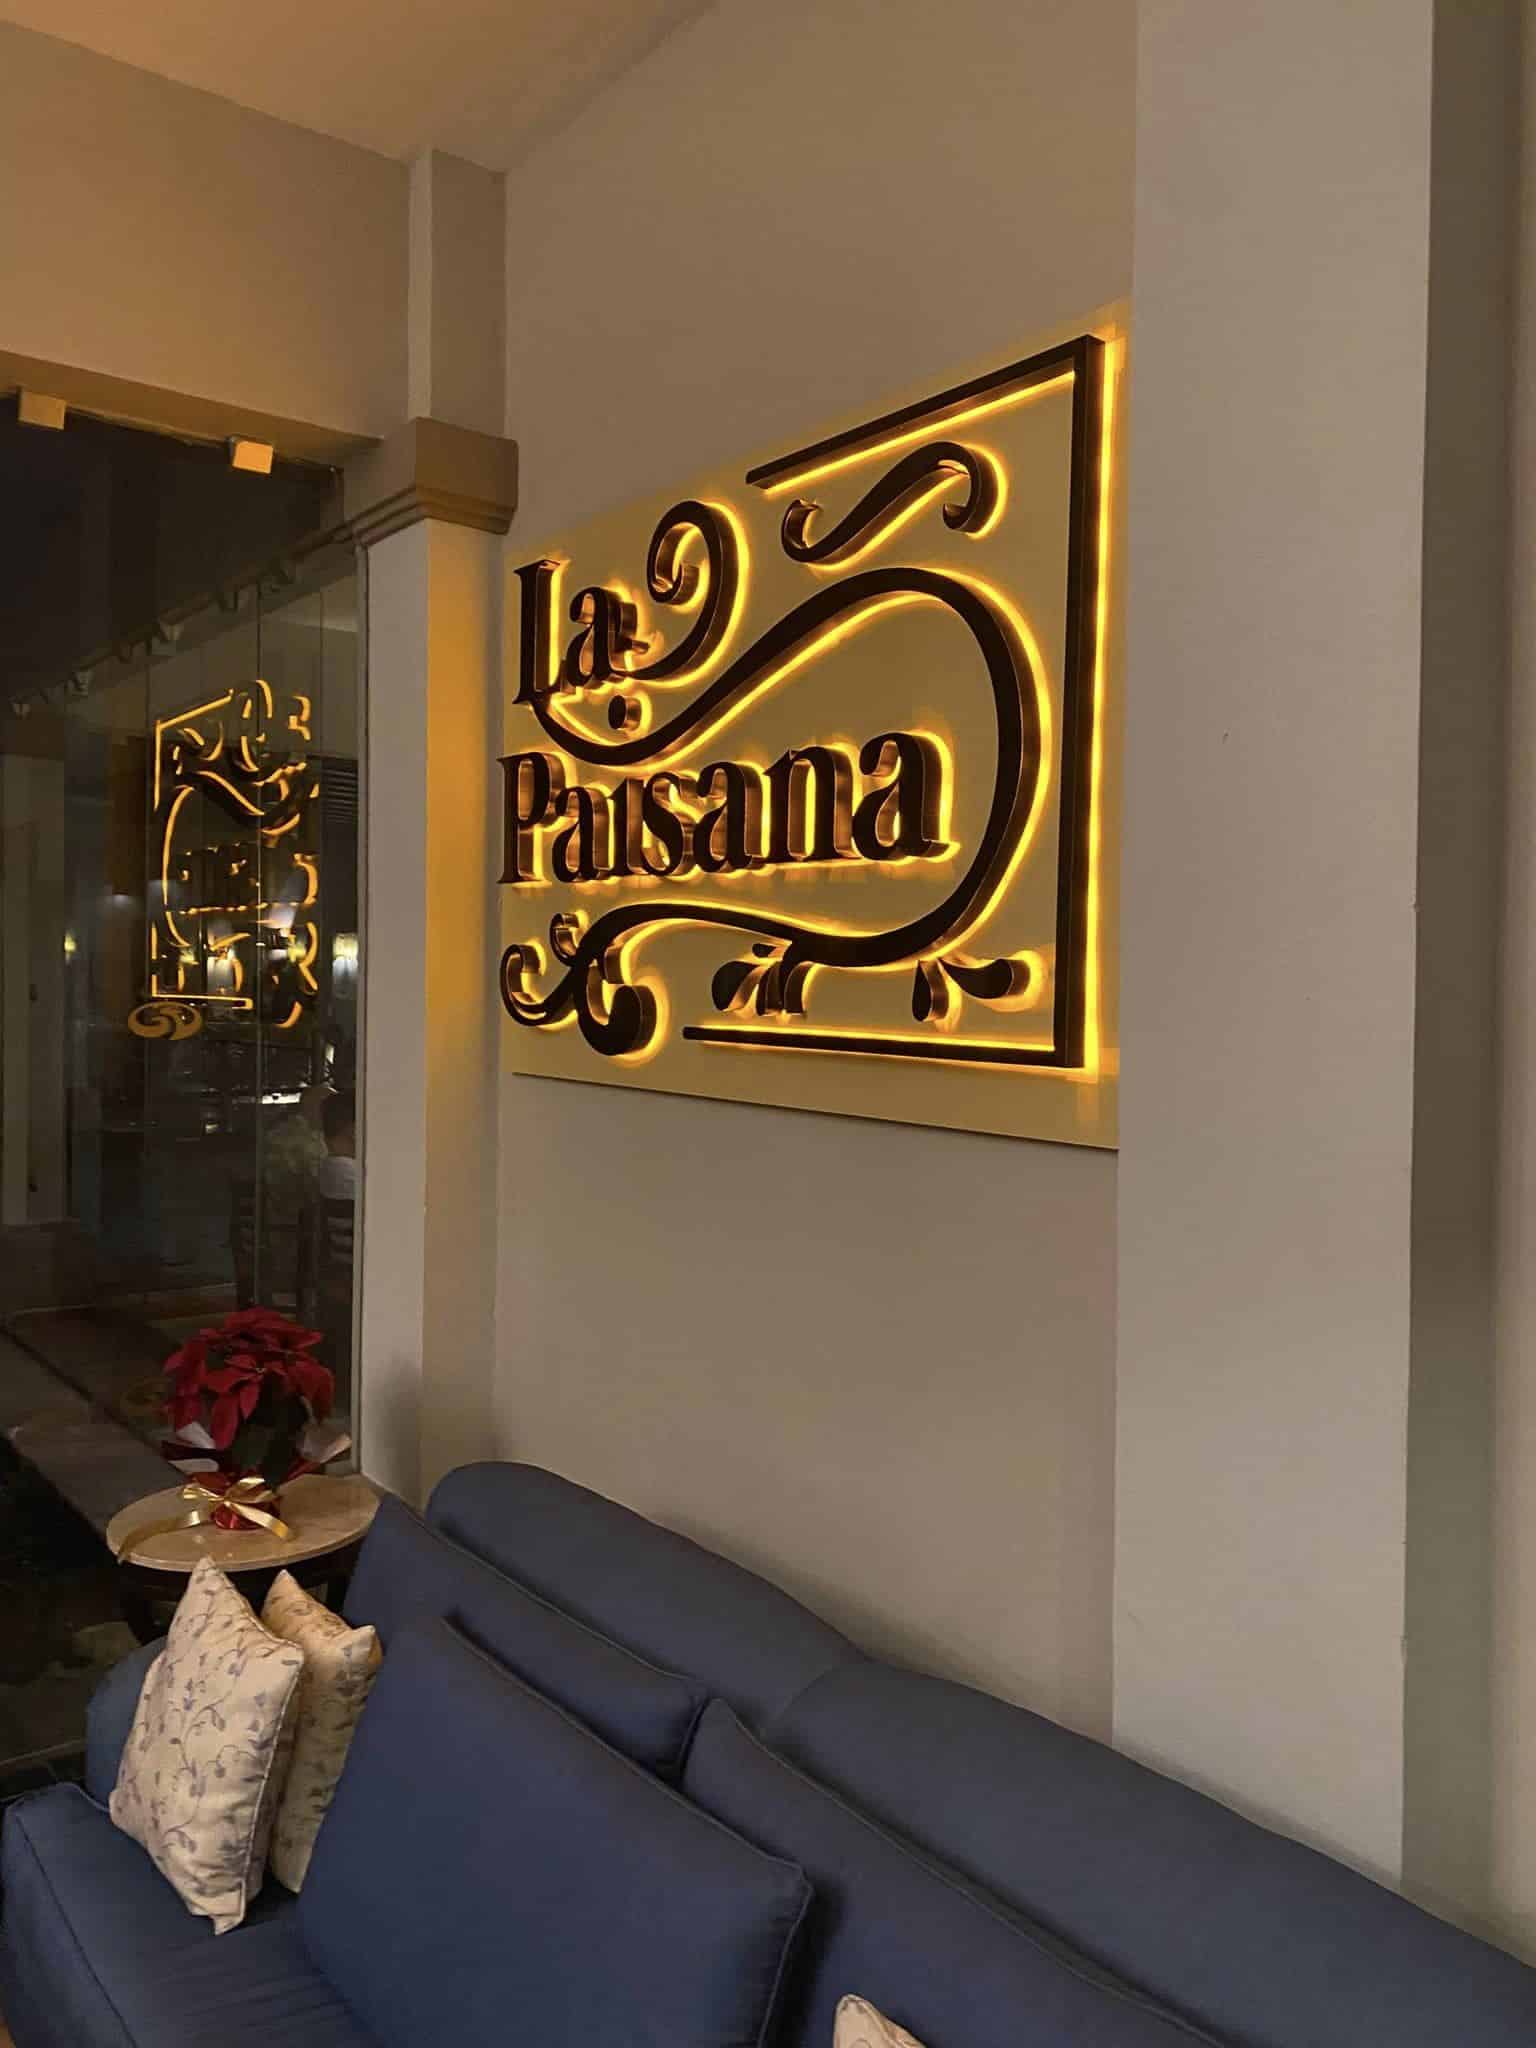 La Paisana now open in Riviera Maya!